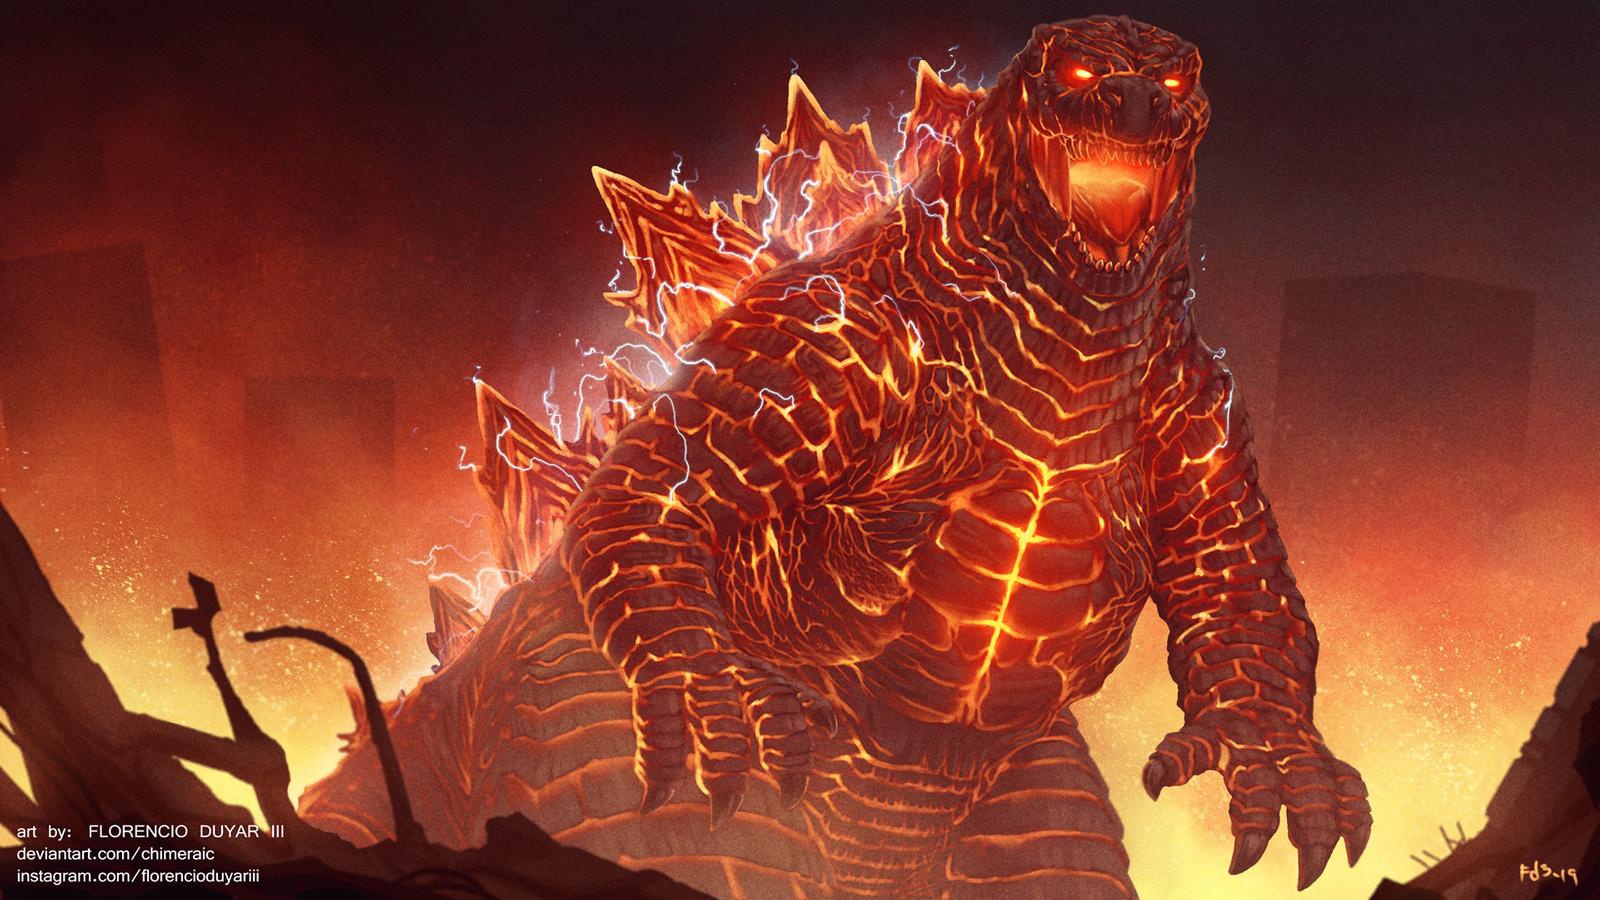 Who would win in a fight, Burning Godzilla (2019) or Burning Godzilla (1995)?